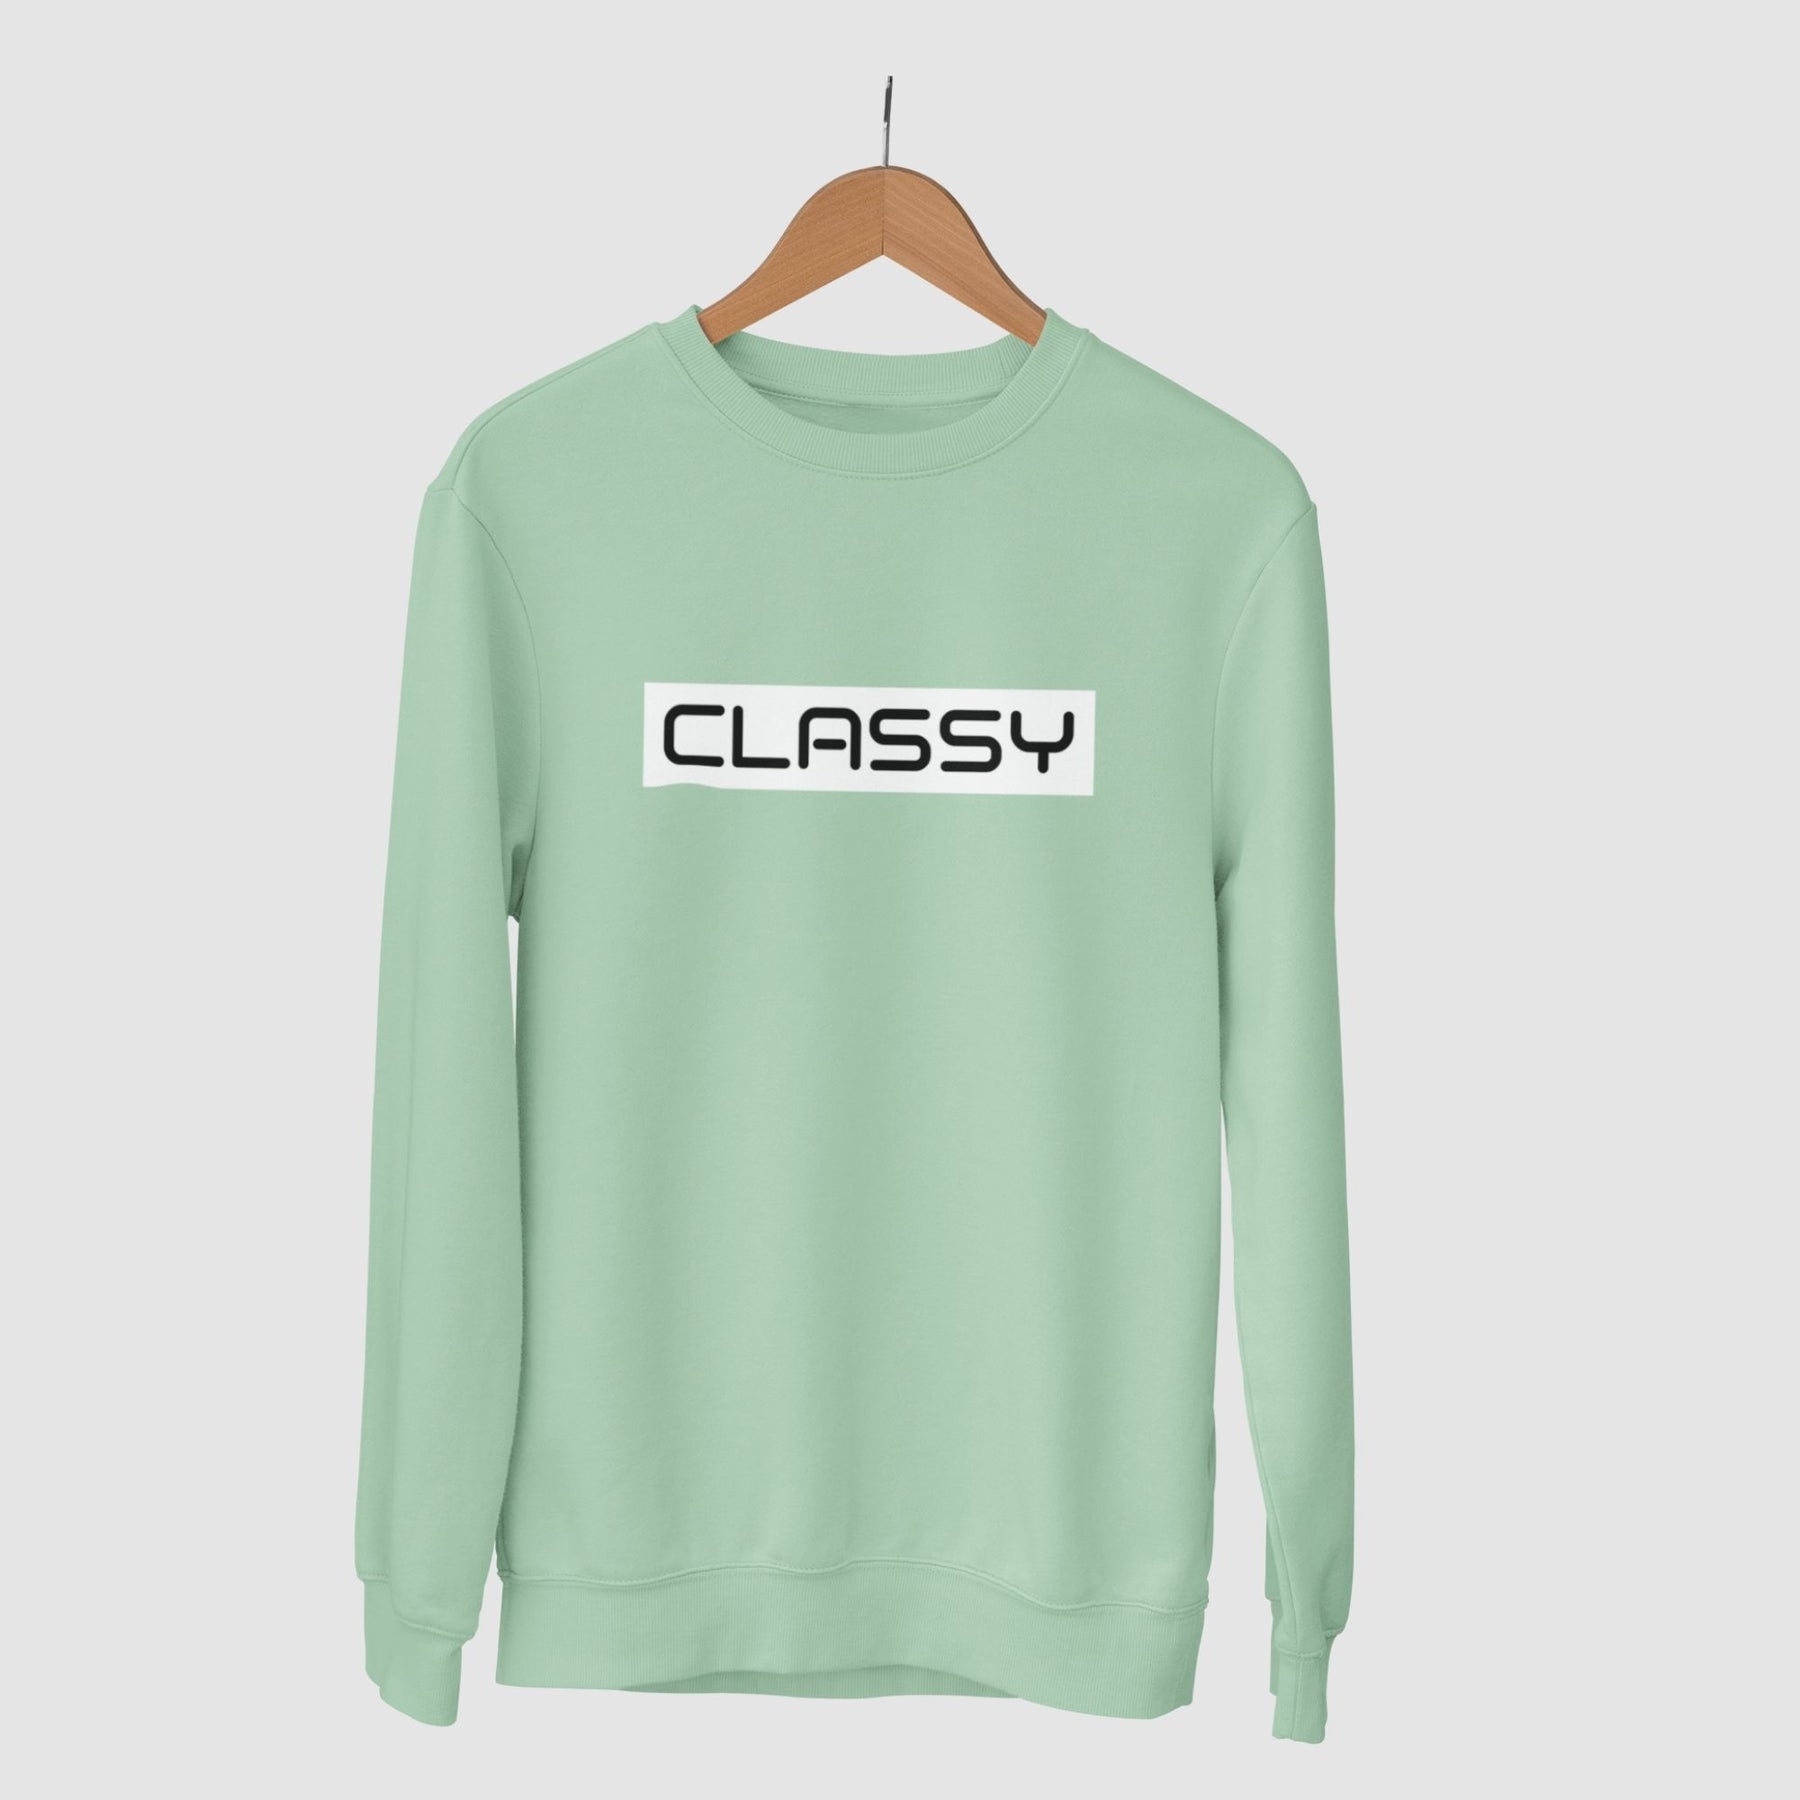 classy-cotton-printed-unisex-mint-sweatshirt-gogirgit-com